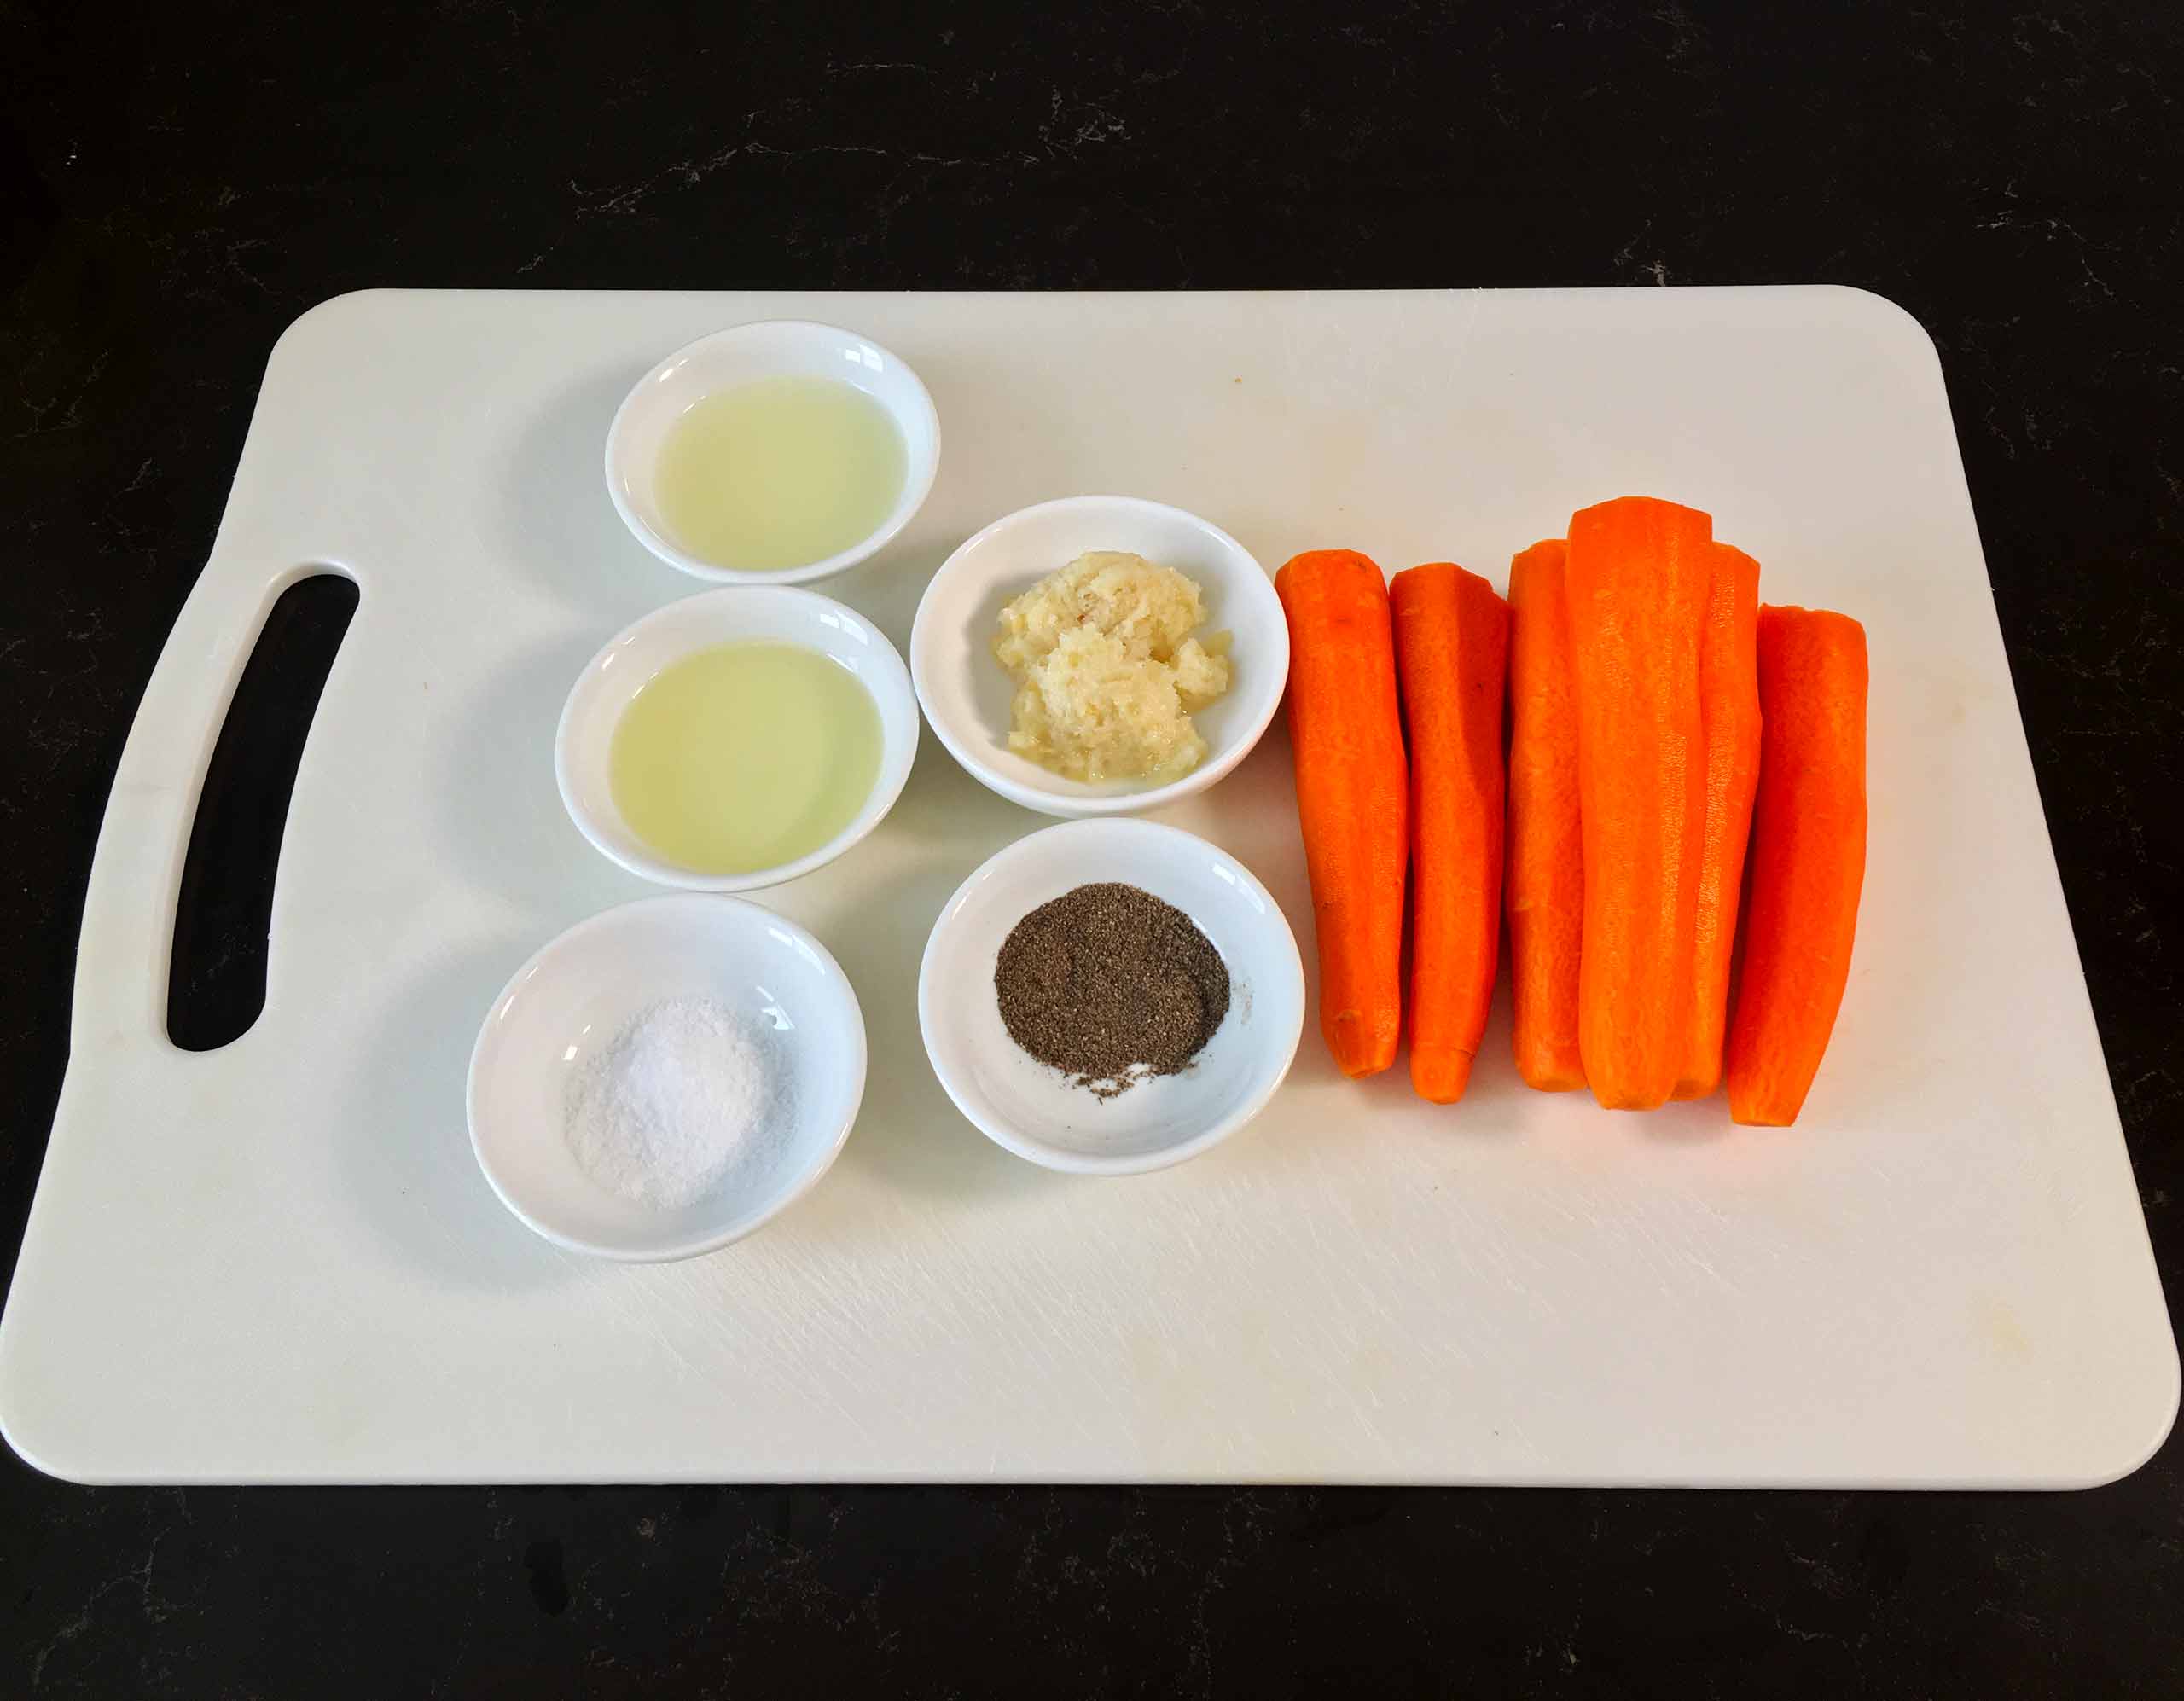 Atomic carrot and garlic salad